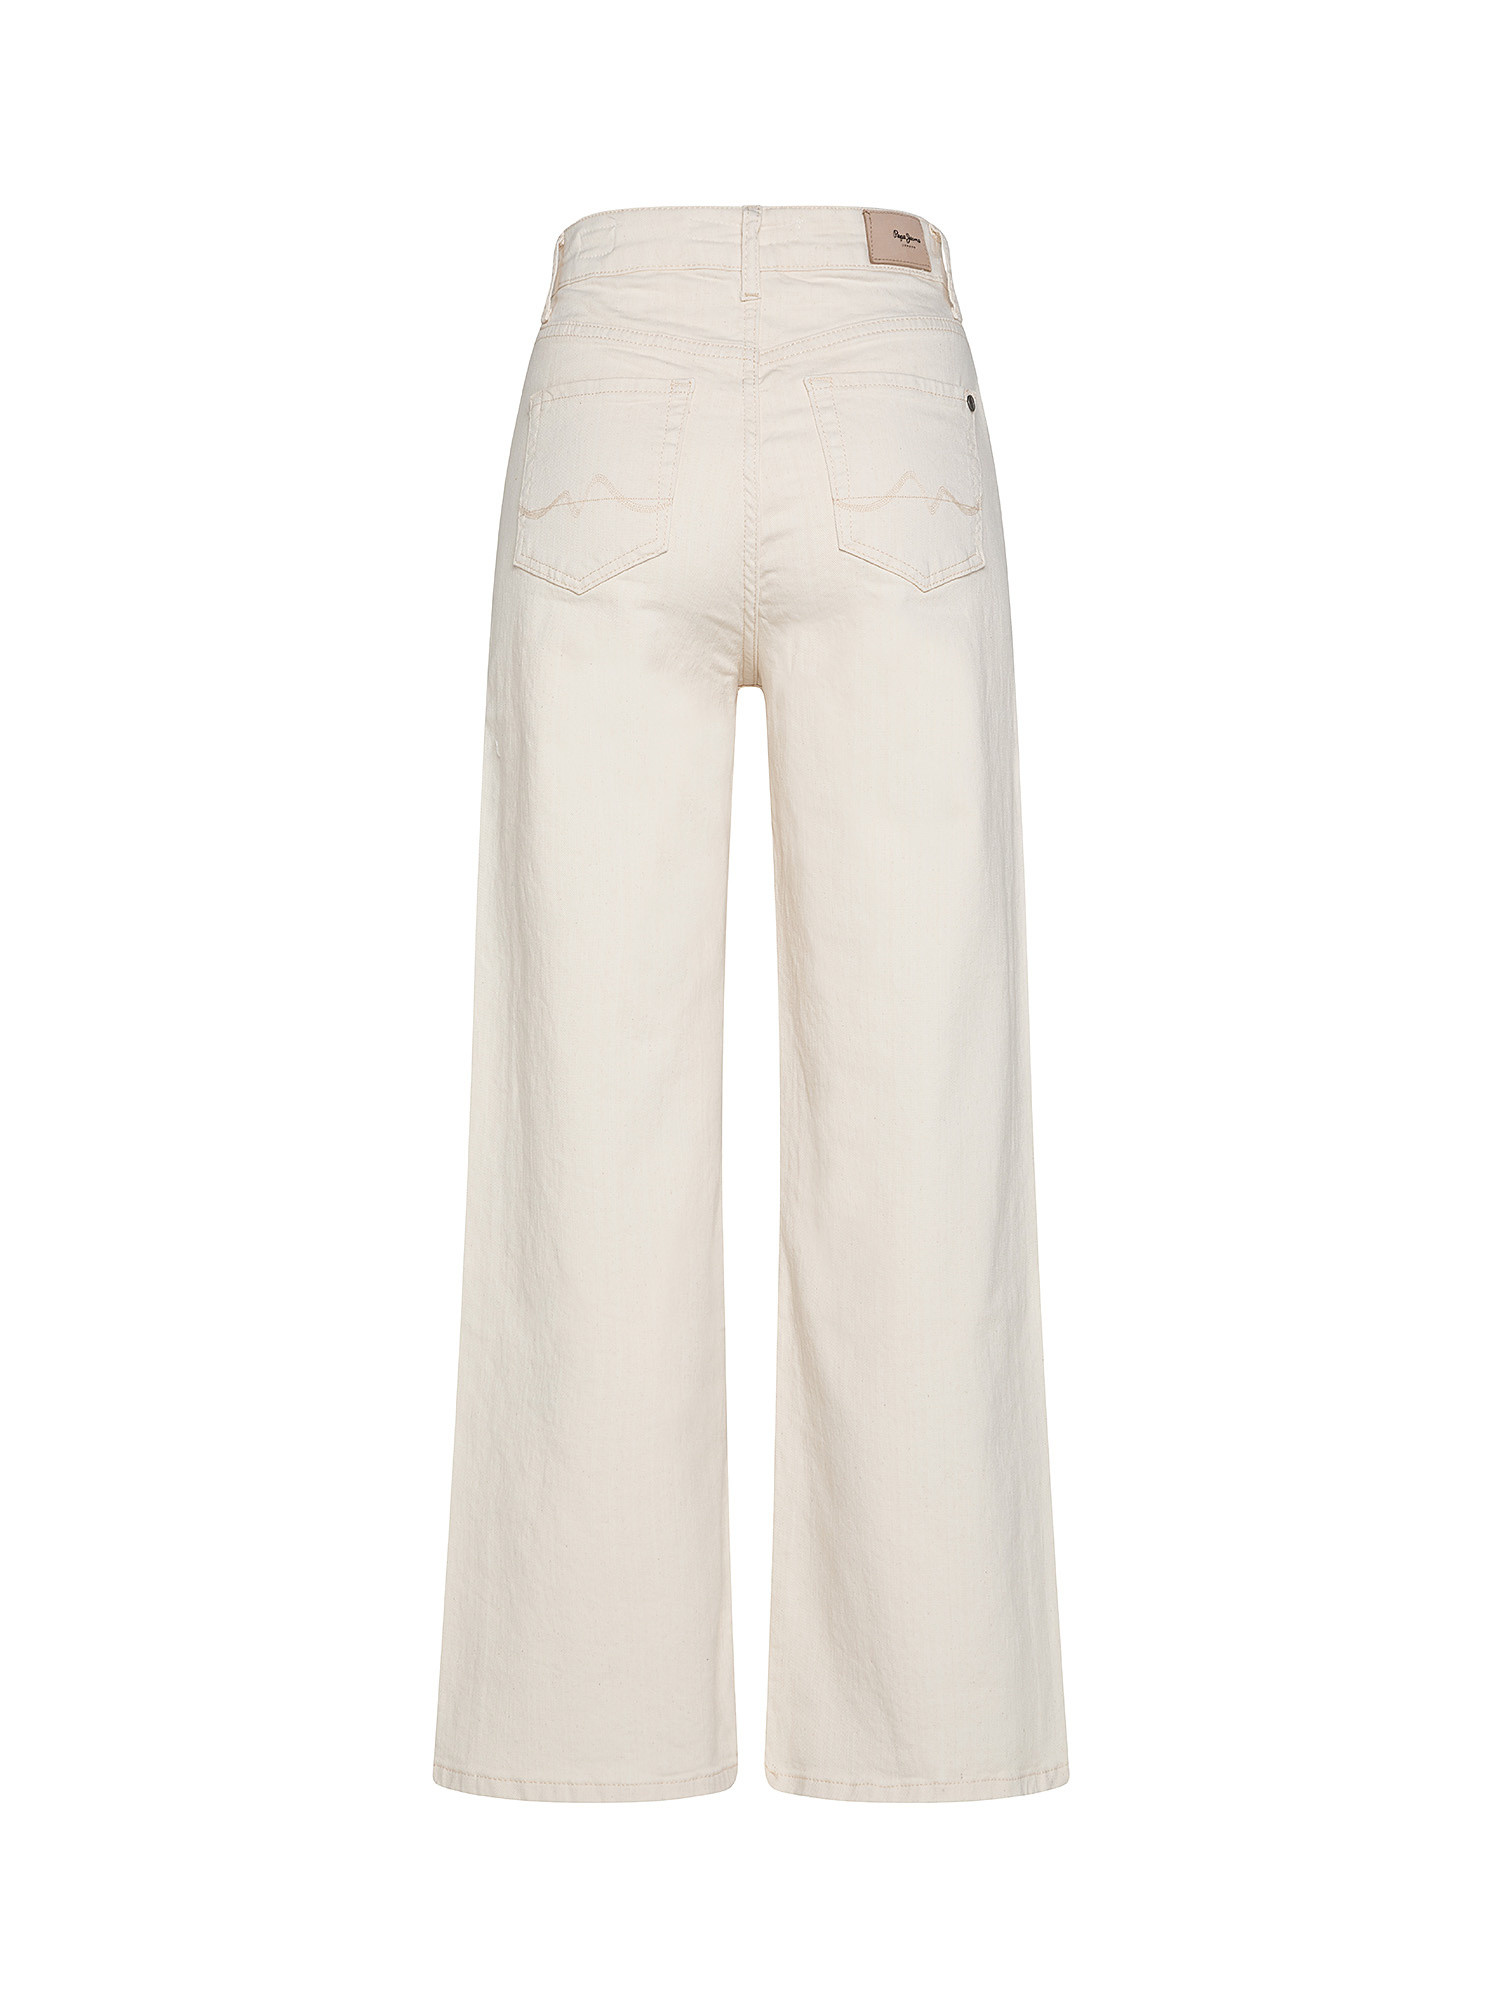 Jeans Lexa sky, taglio wide a vita alta., Bianco panna, large image number 1